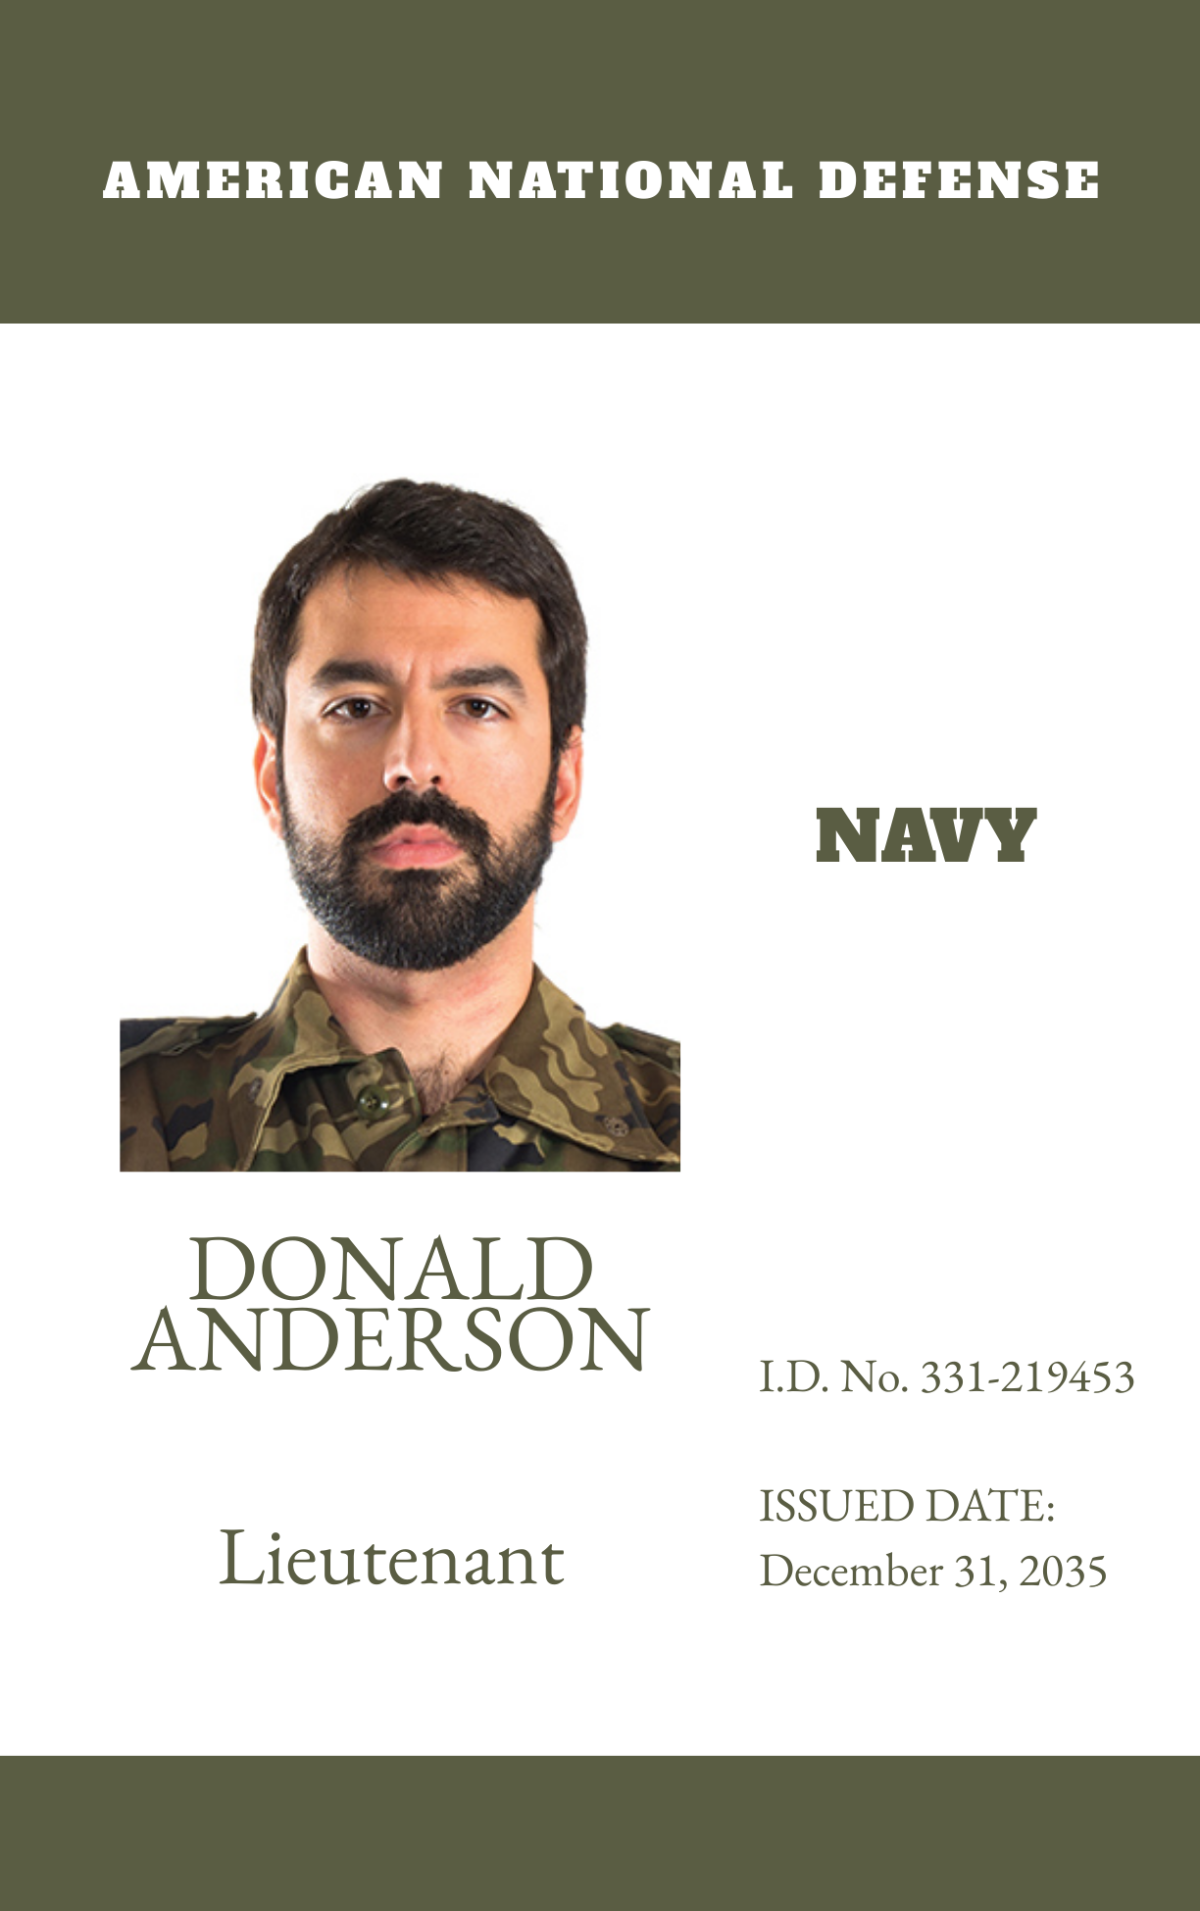 Military ID Card